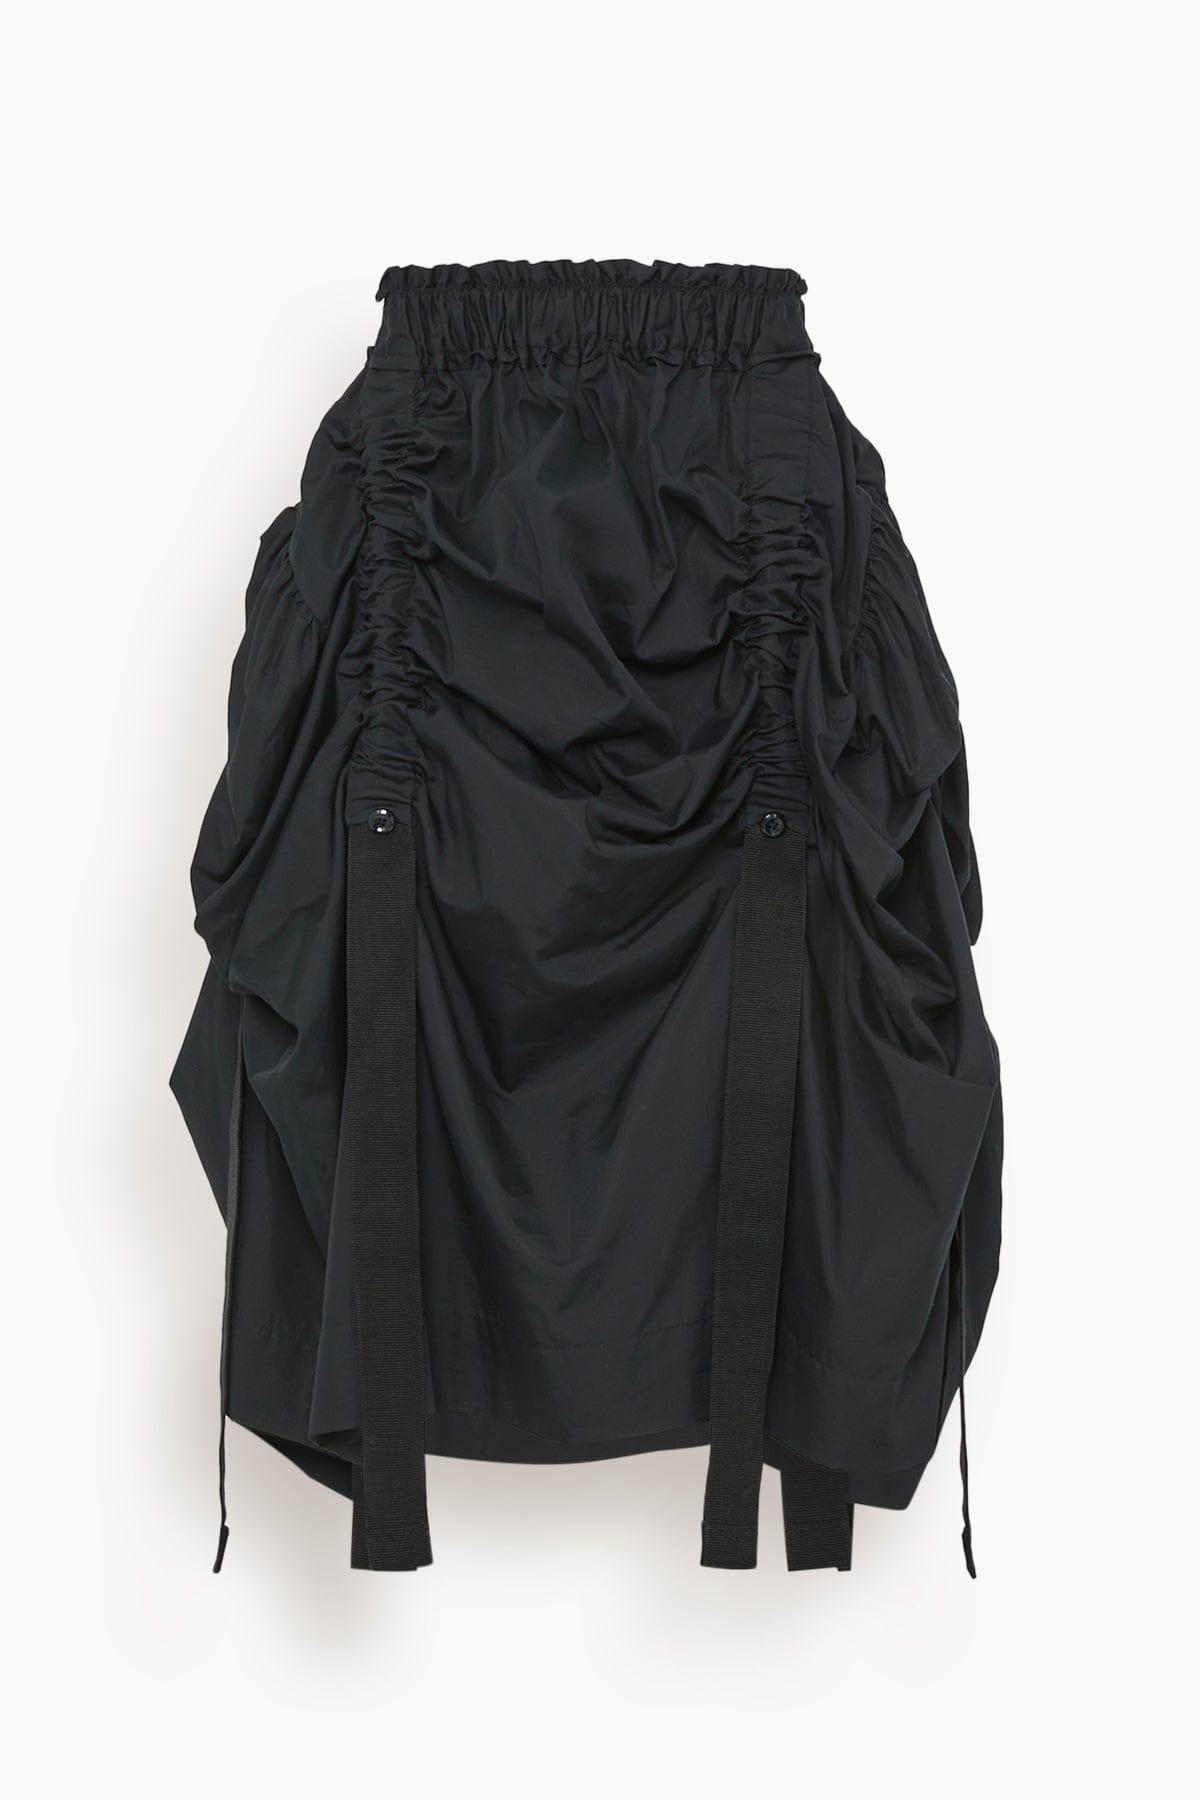 Simone Rocha Midi Skirt With Adjustable Sliders in Black | Lyst